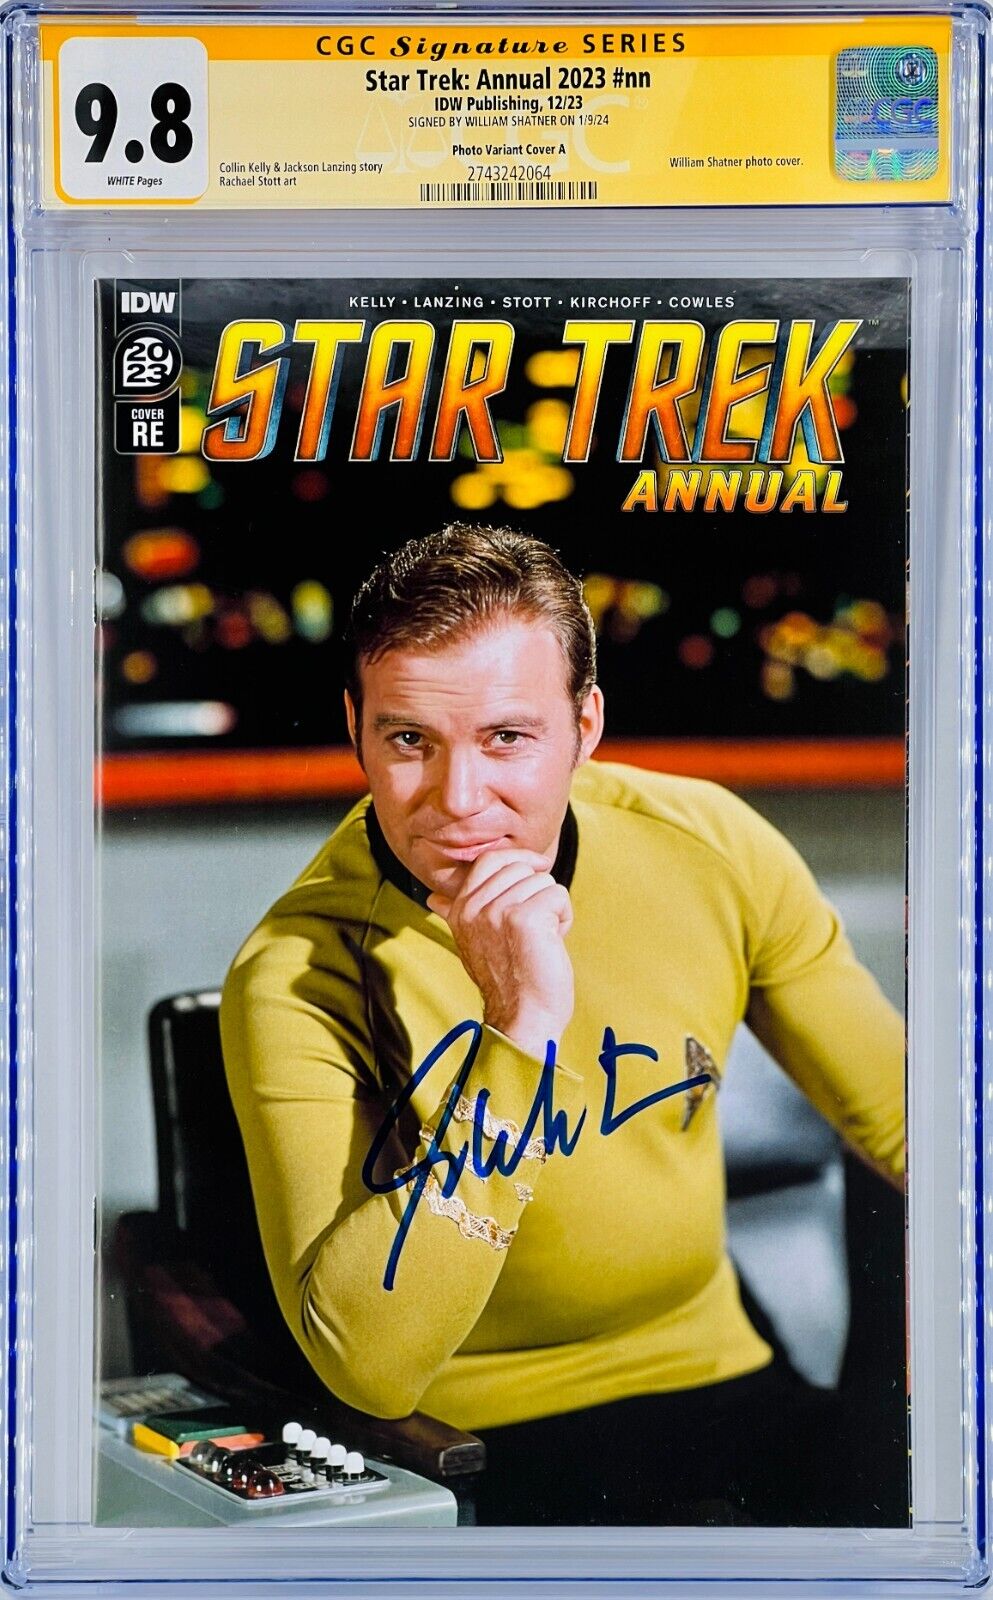 William Shatner Signed Photo Cover CGC SS Graded 9.8 Star Trek Annual #nn